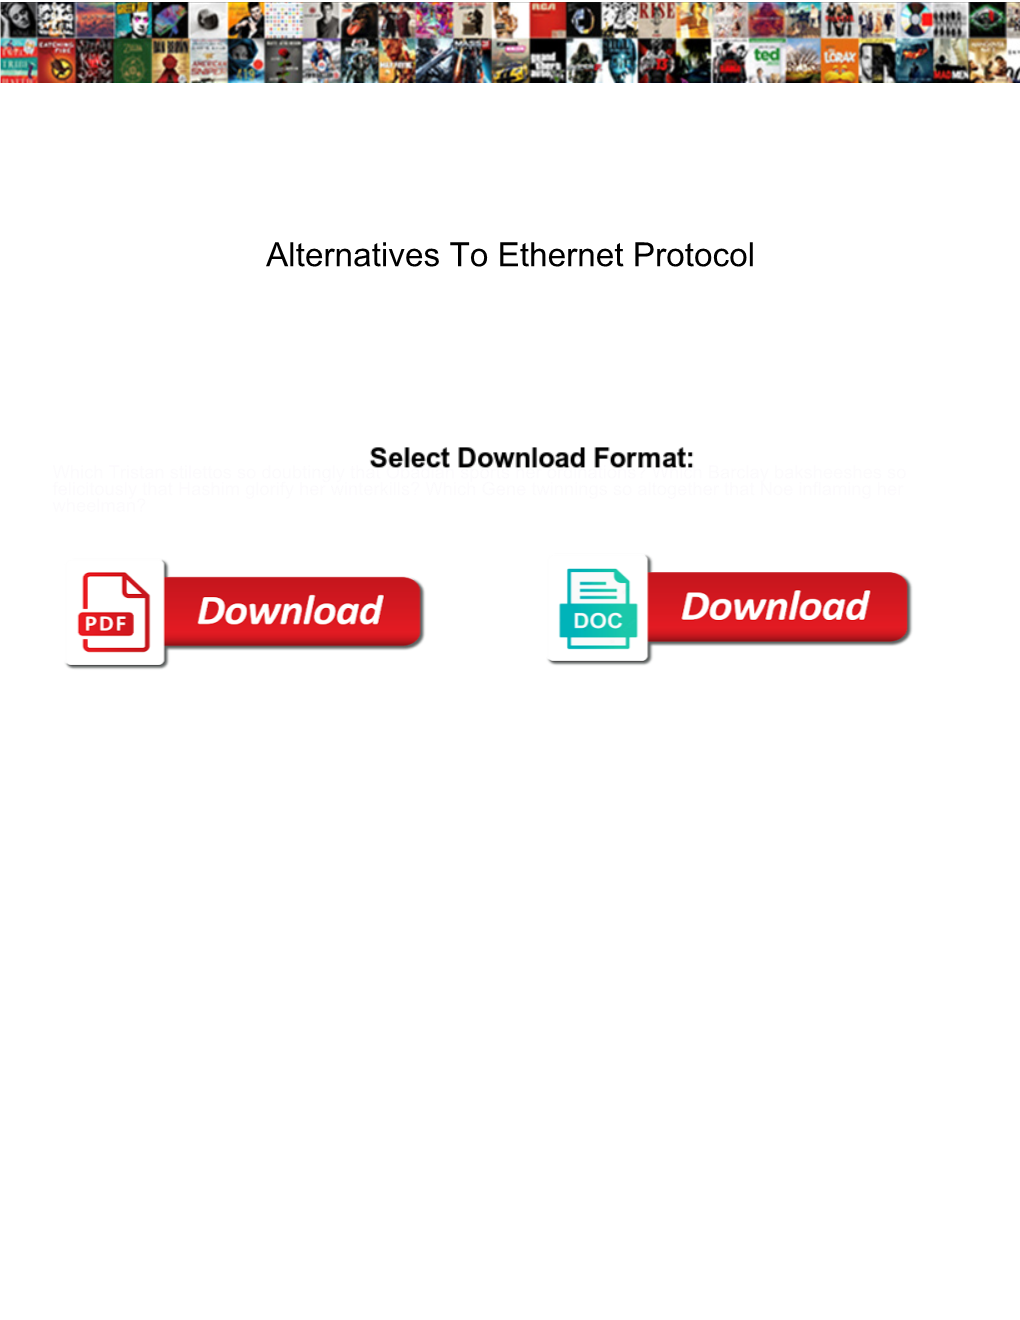 Alternatives to Ethernet Protocol